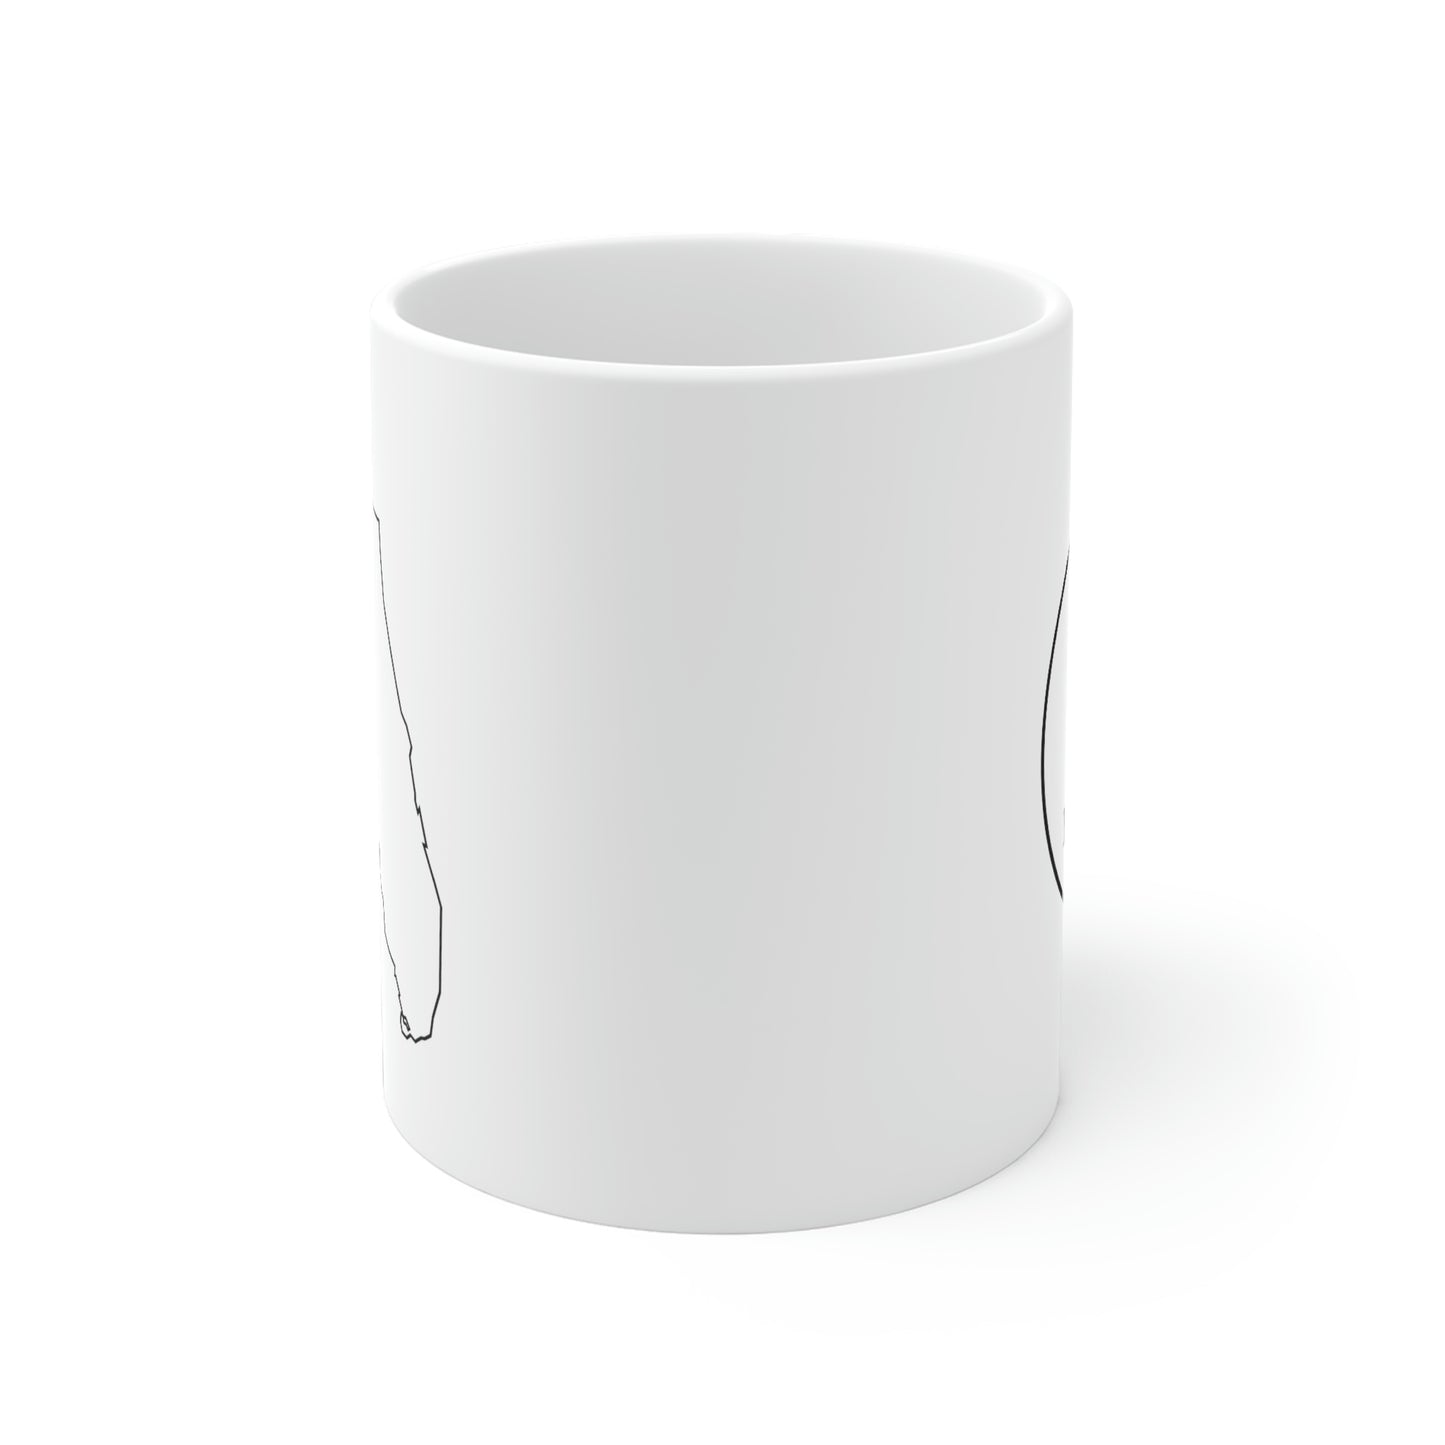 FL17 - Ceramic Mugs (11oz)